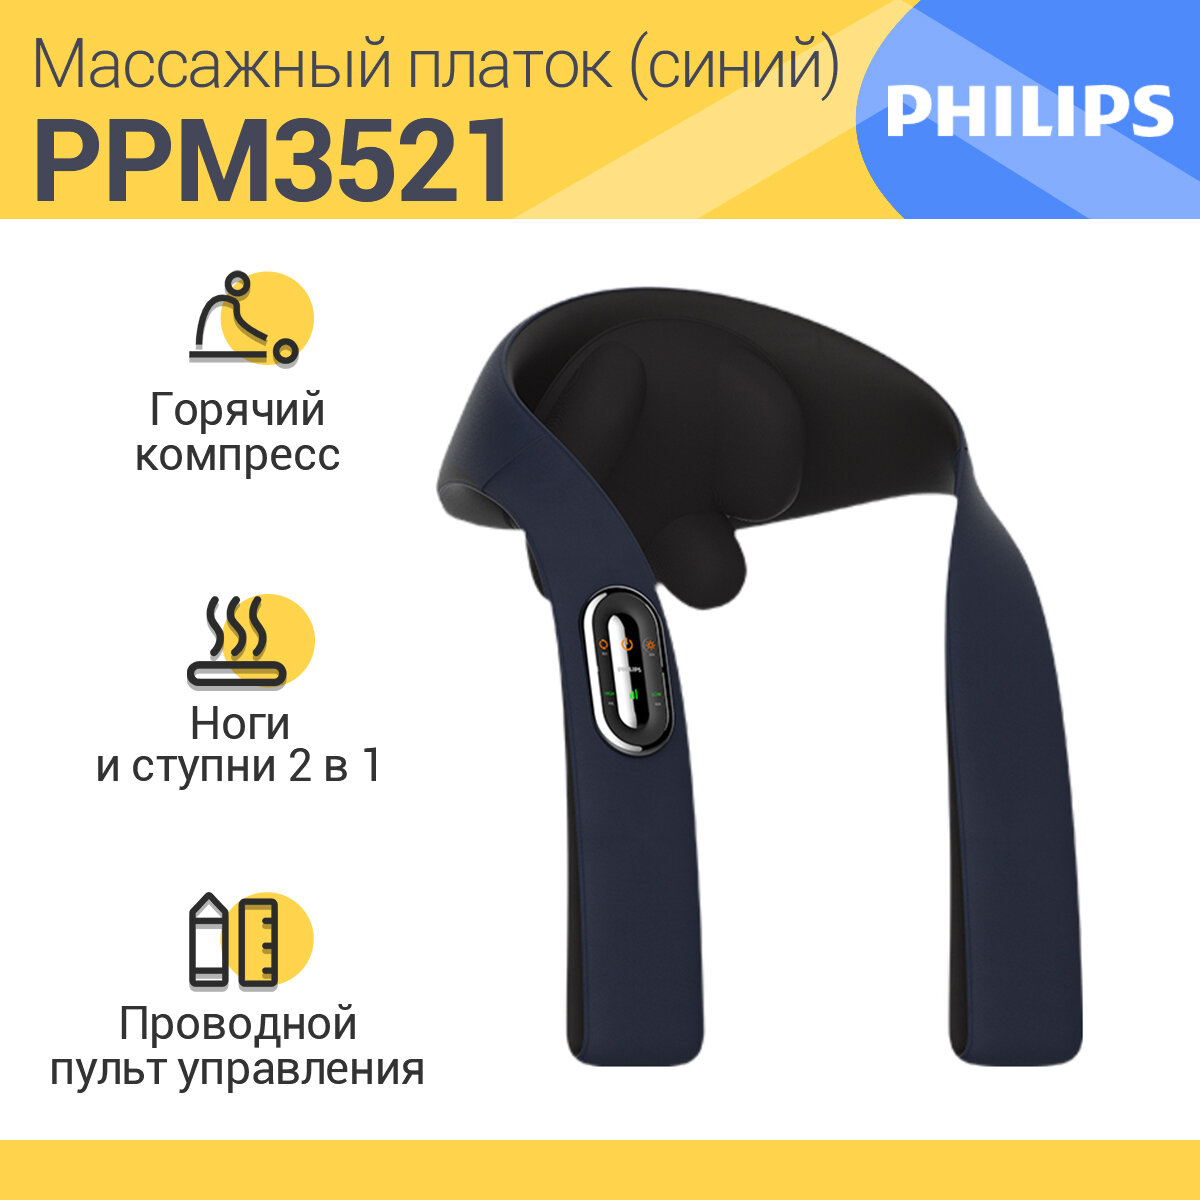 Массажёр для тела шеи и спины электрический Philips PPM3521DB/97